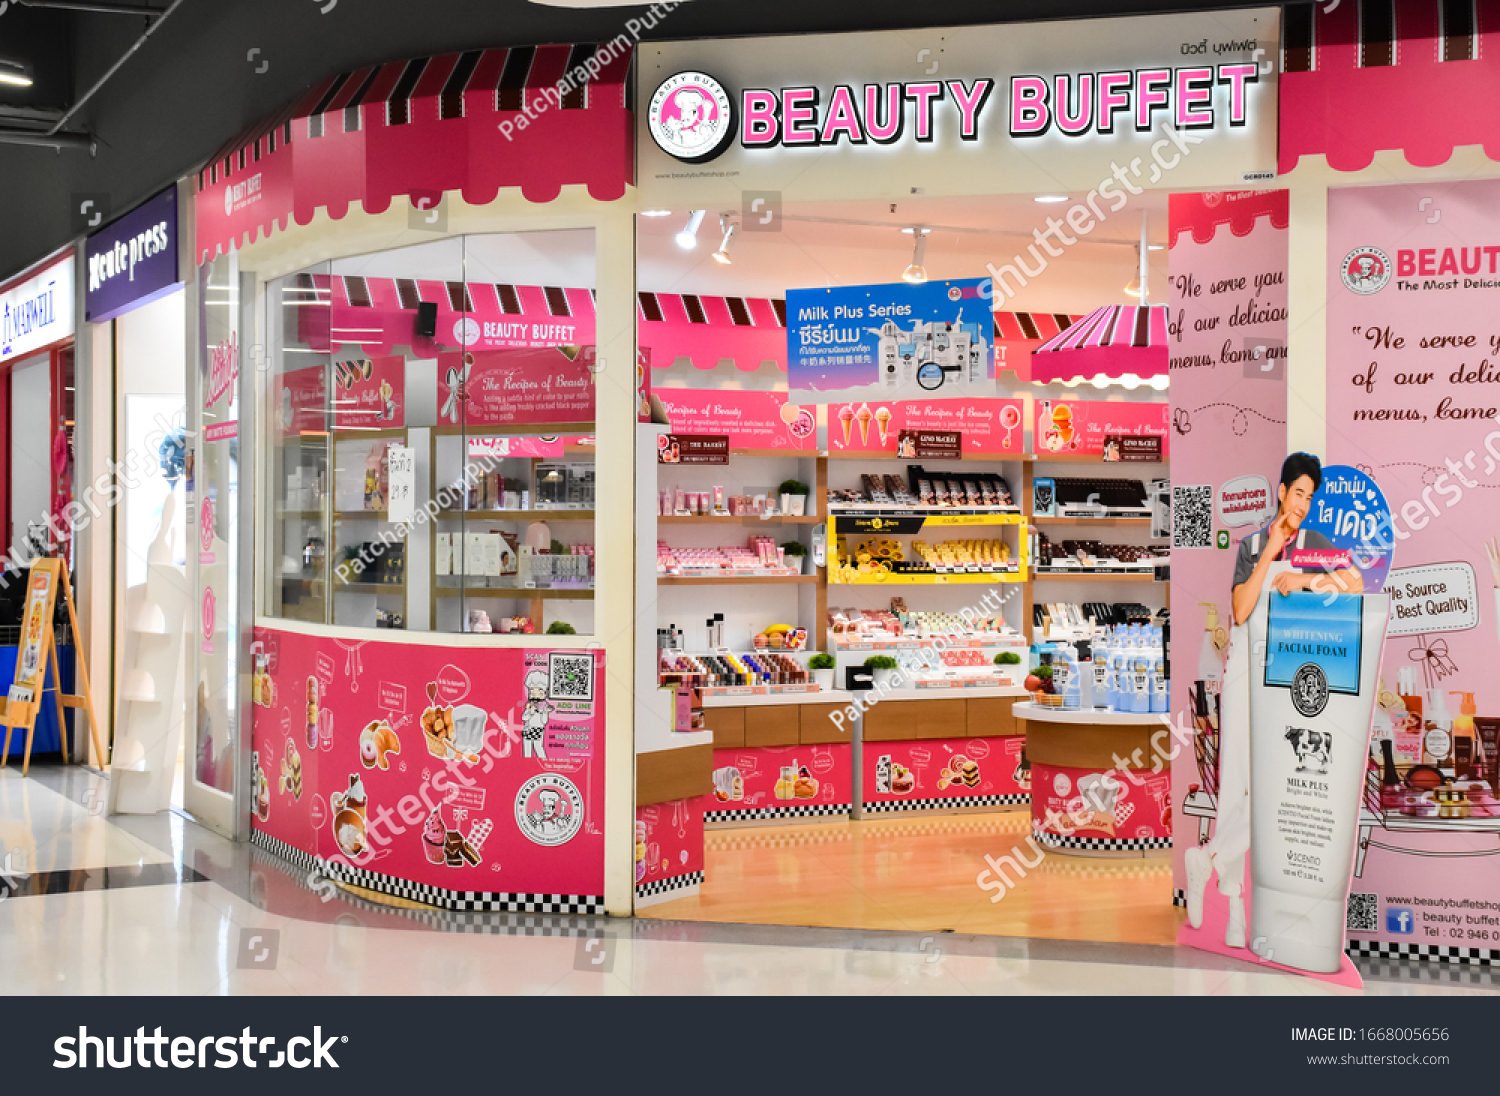 Lop Buri Beauty Buffet Brand Beauty Stock Photo Edit Now 1668005656